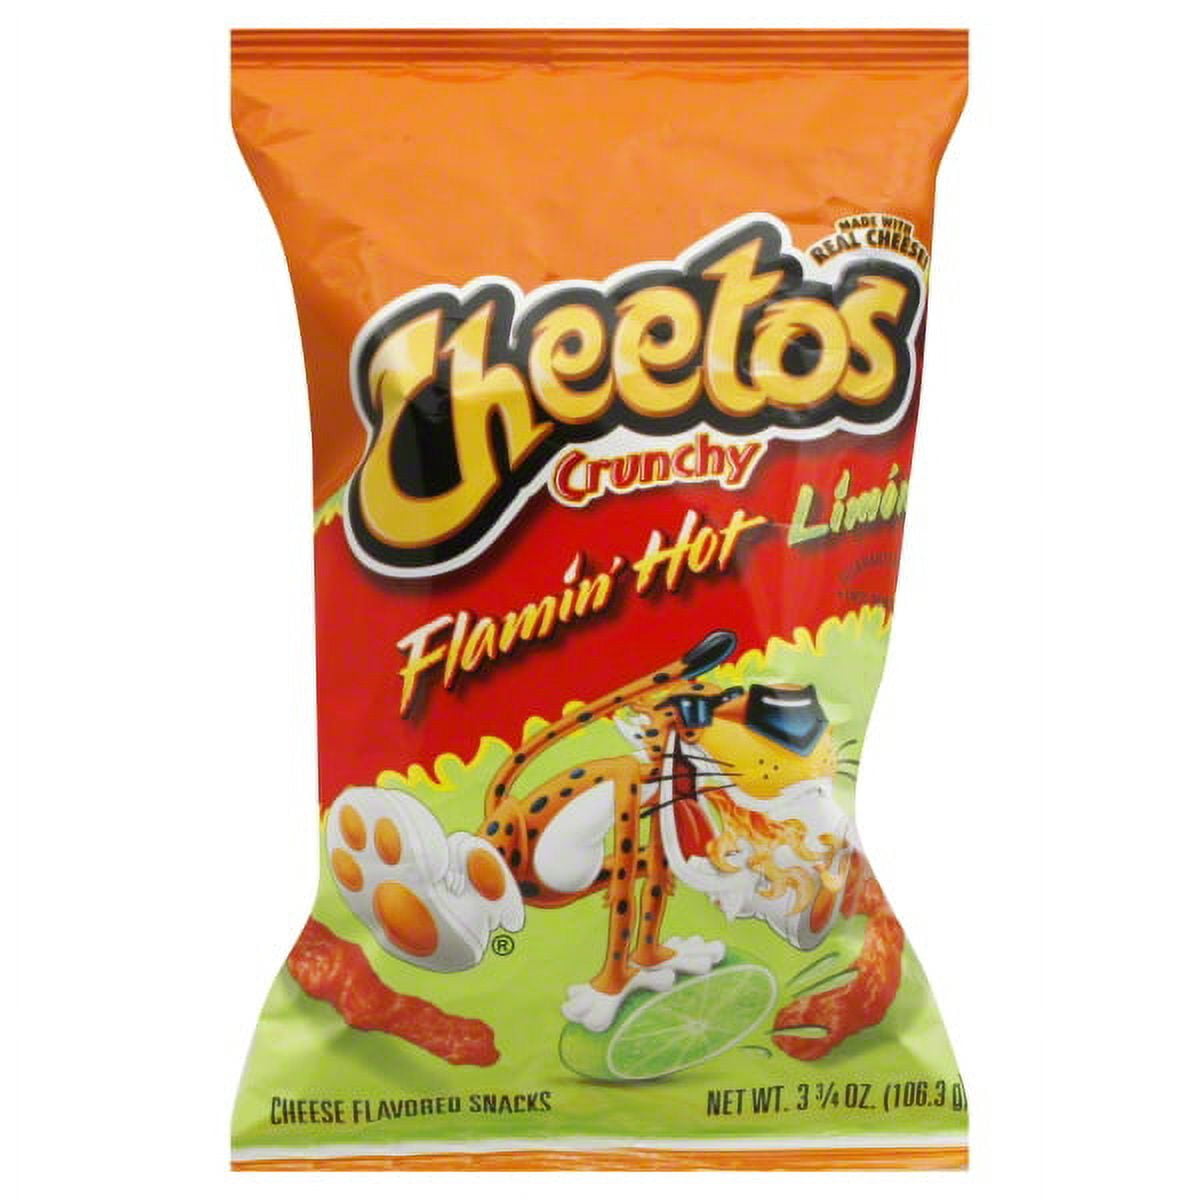 Cheetos® Crunchy Flamin Hot Limon Flavored Snack, 3.25 oz - Harris Teeter